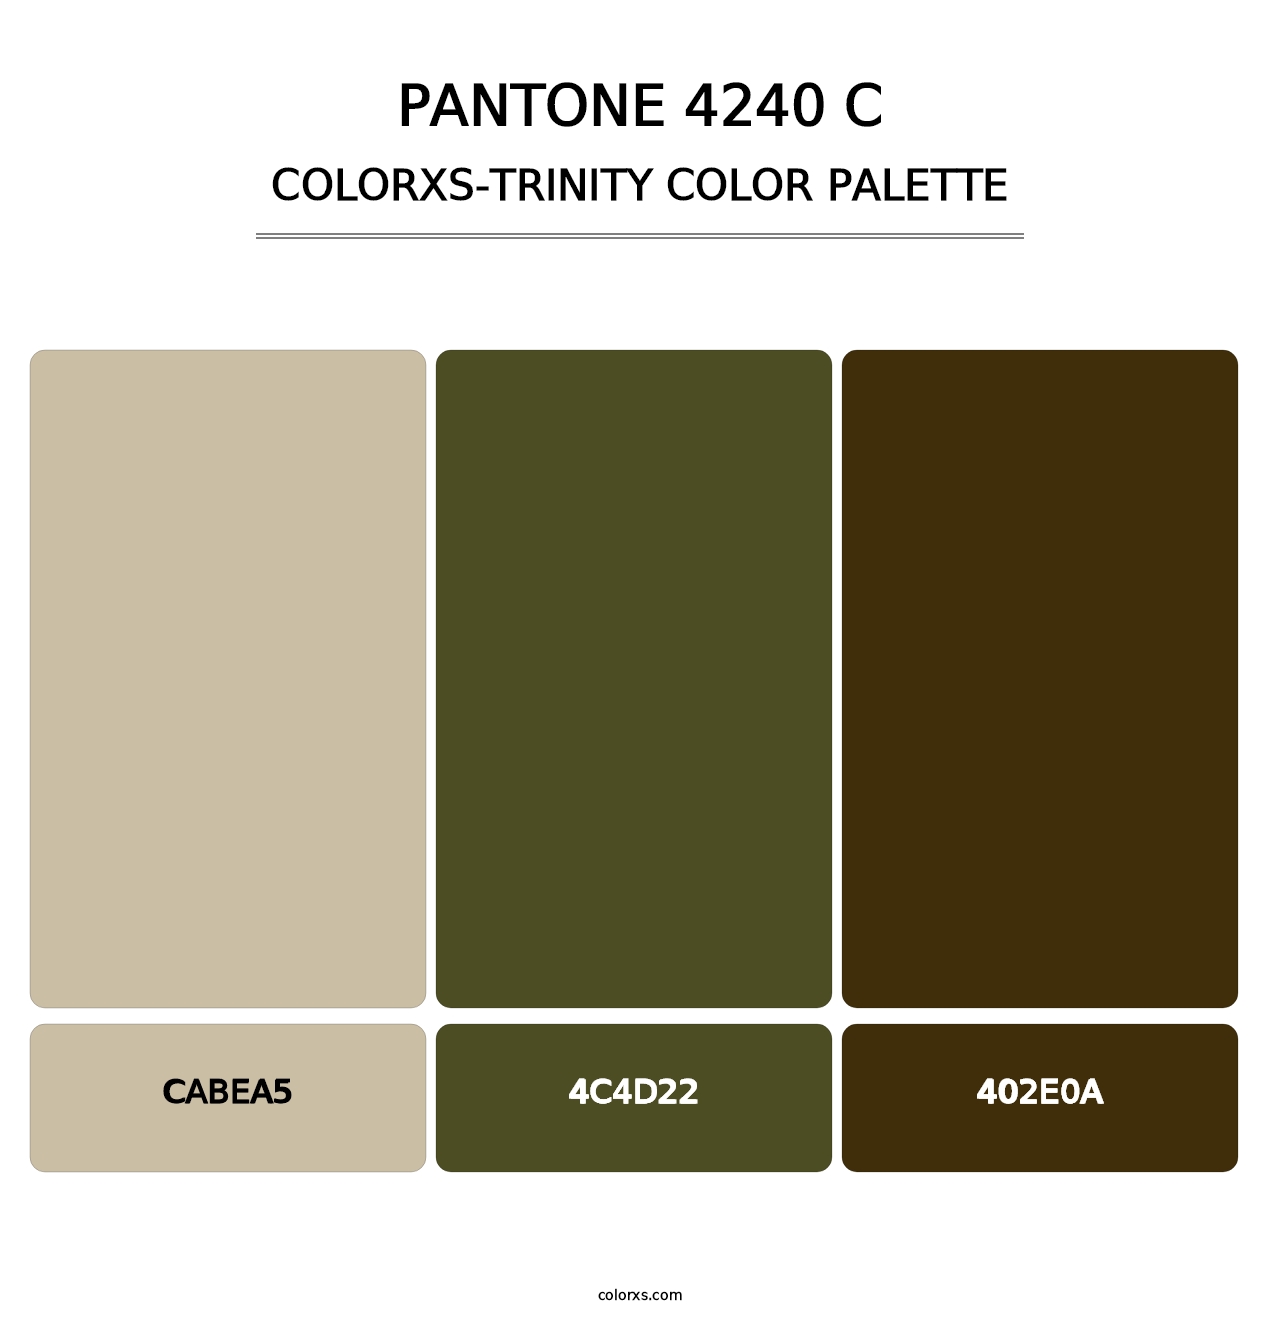 PANTONE 4240 C - Colorxs Trinity Palette